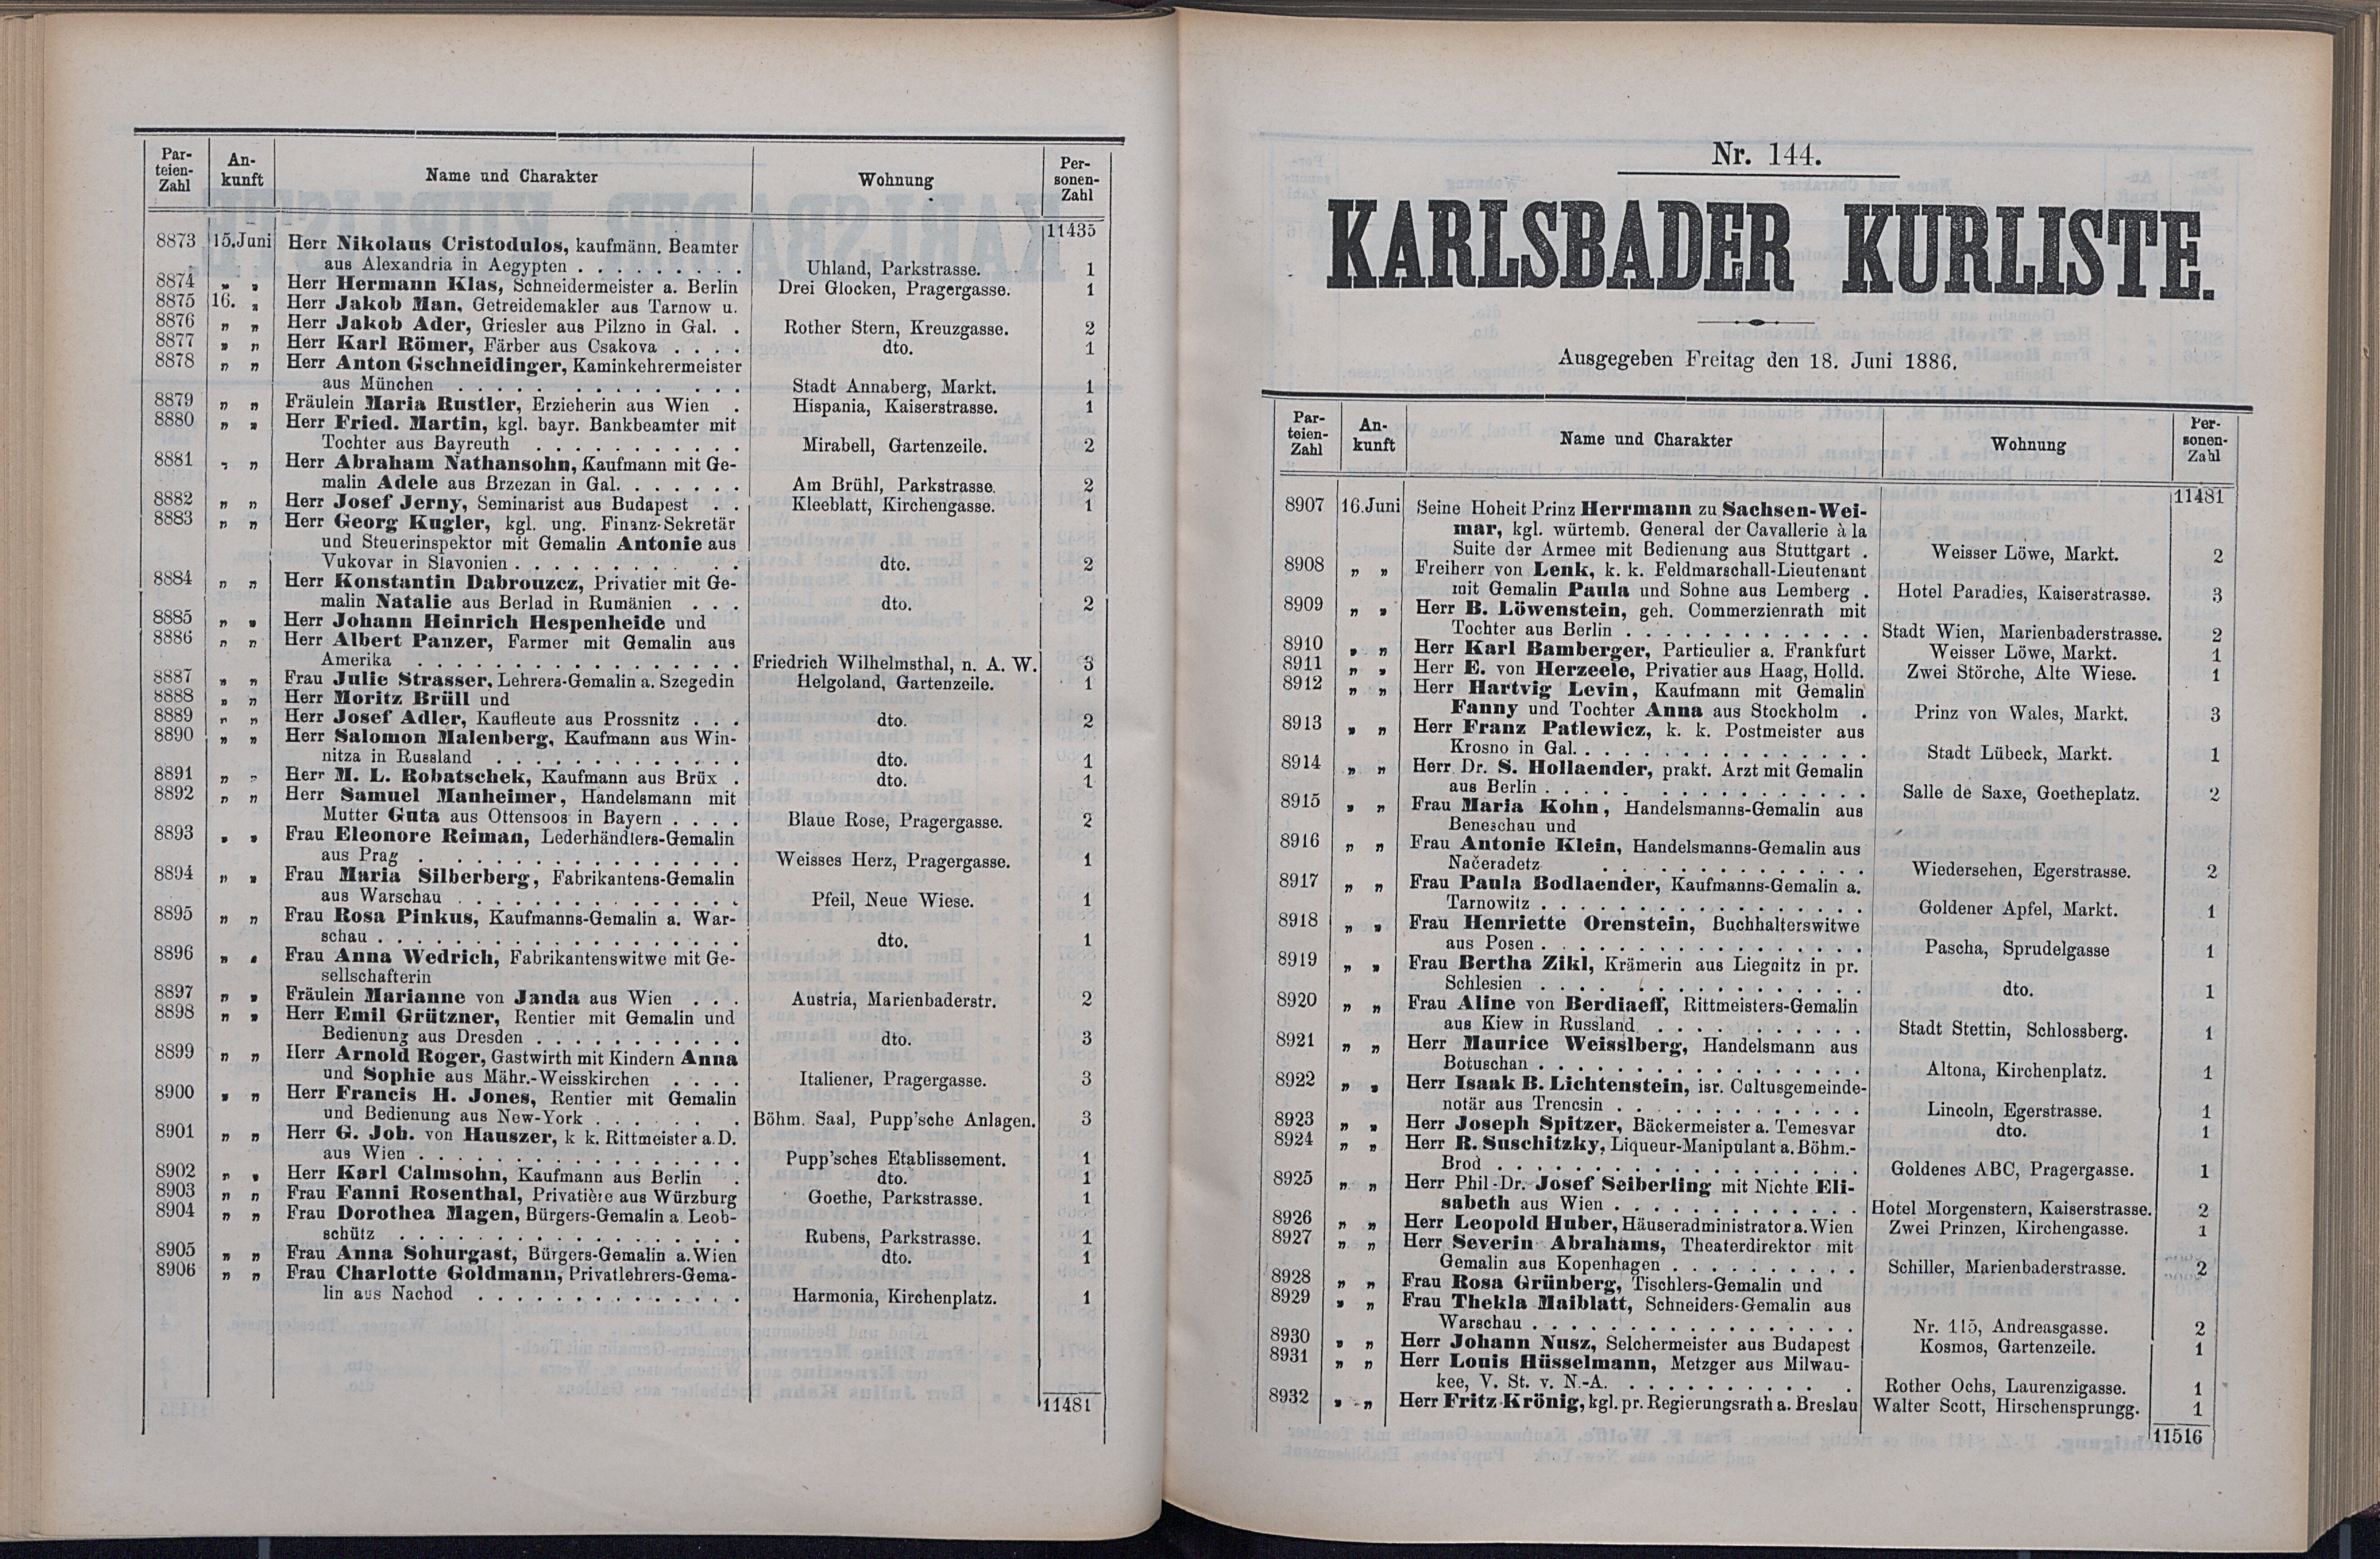 198. soap-kv_knihovna_karlsbader-kurliste-1886_1990